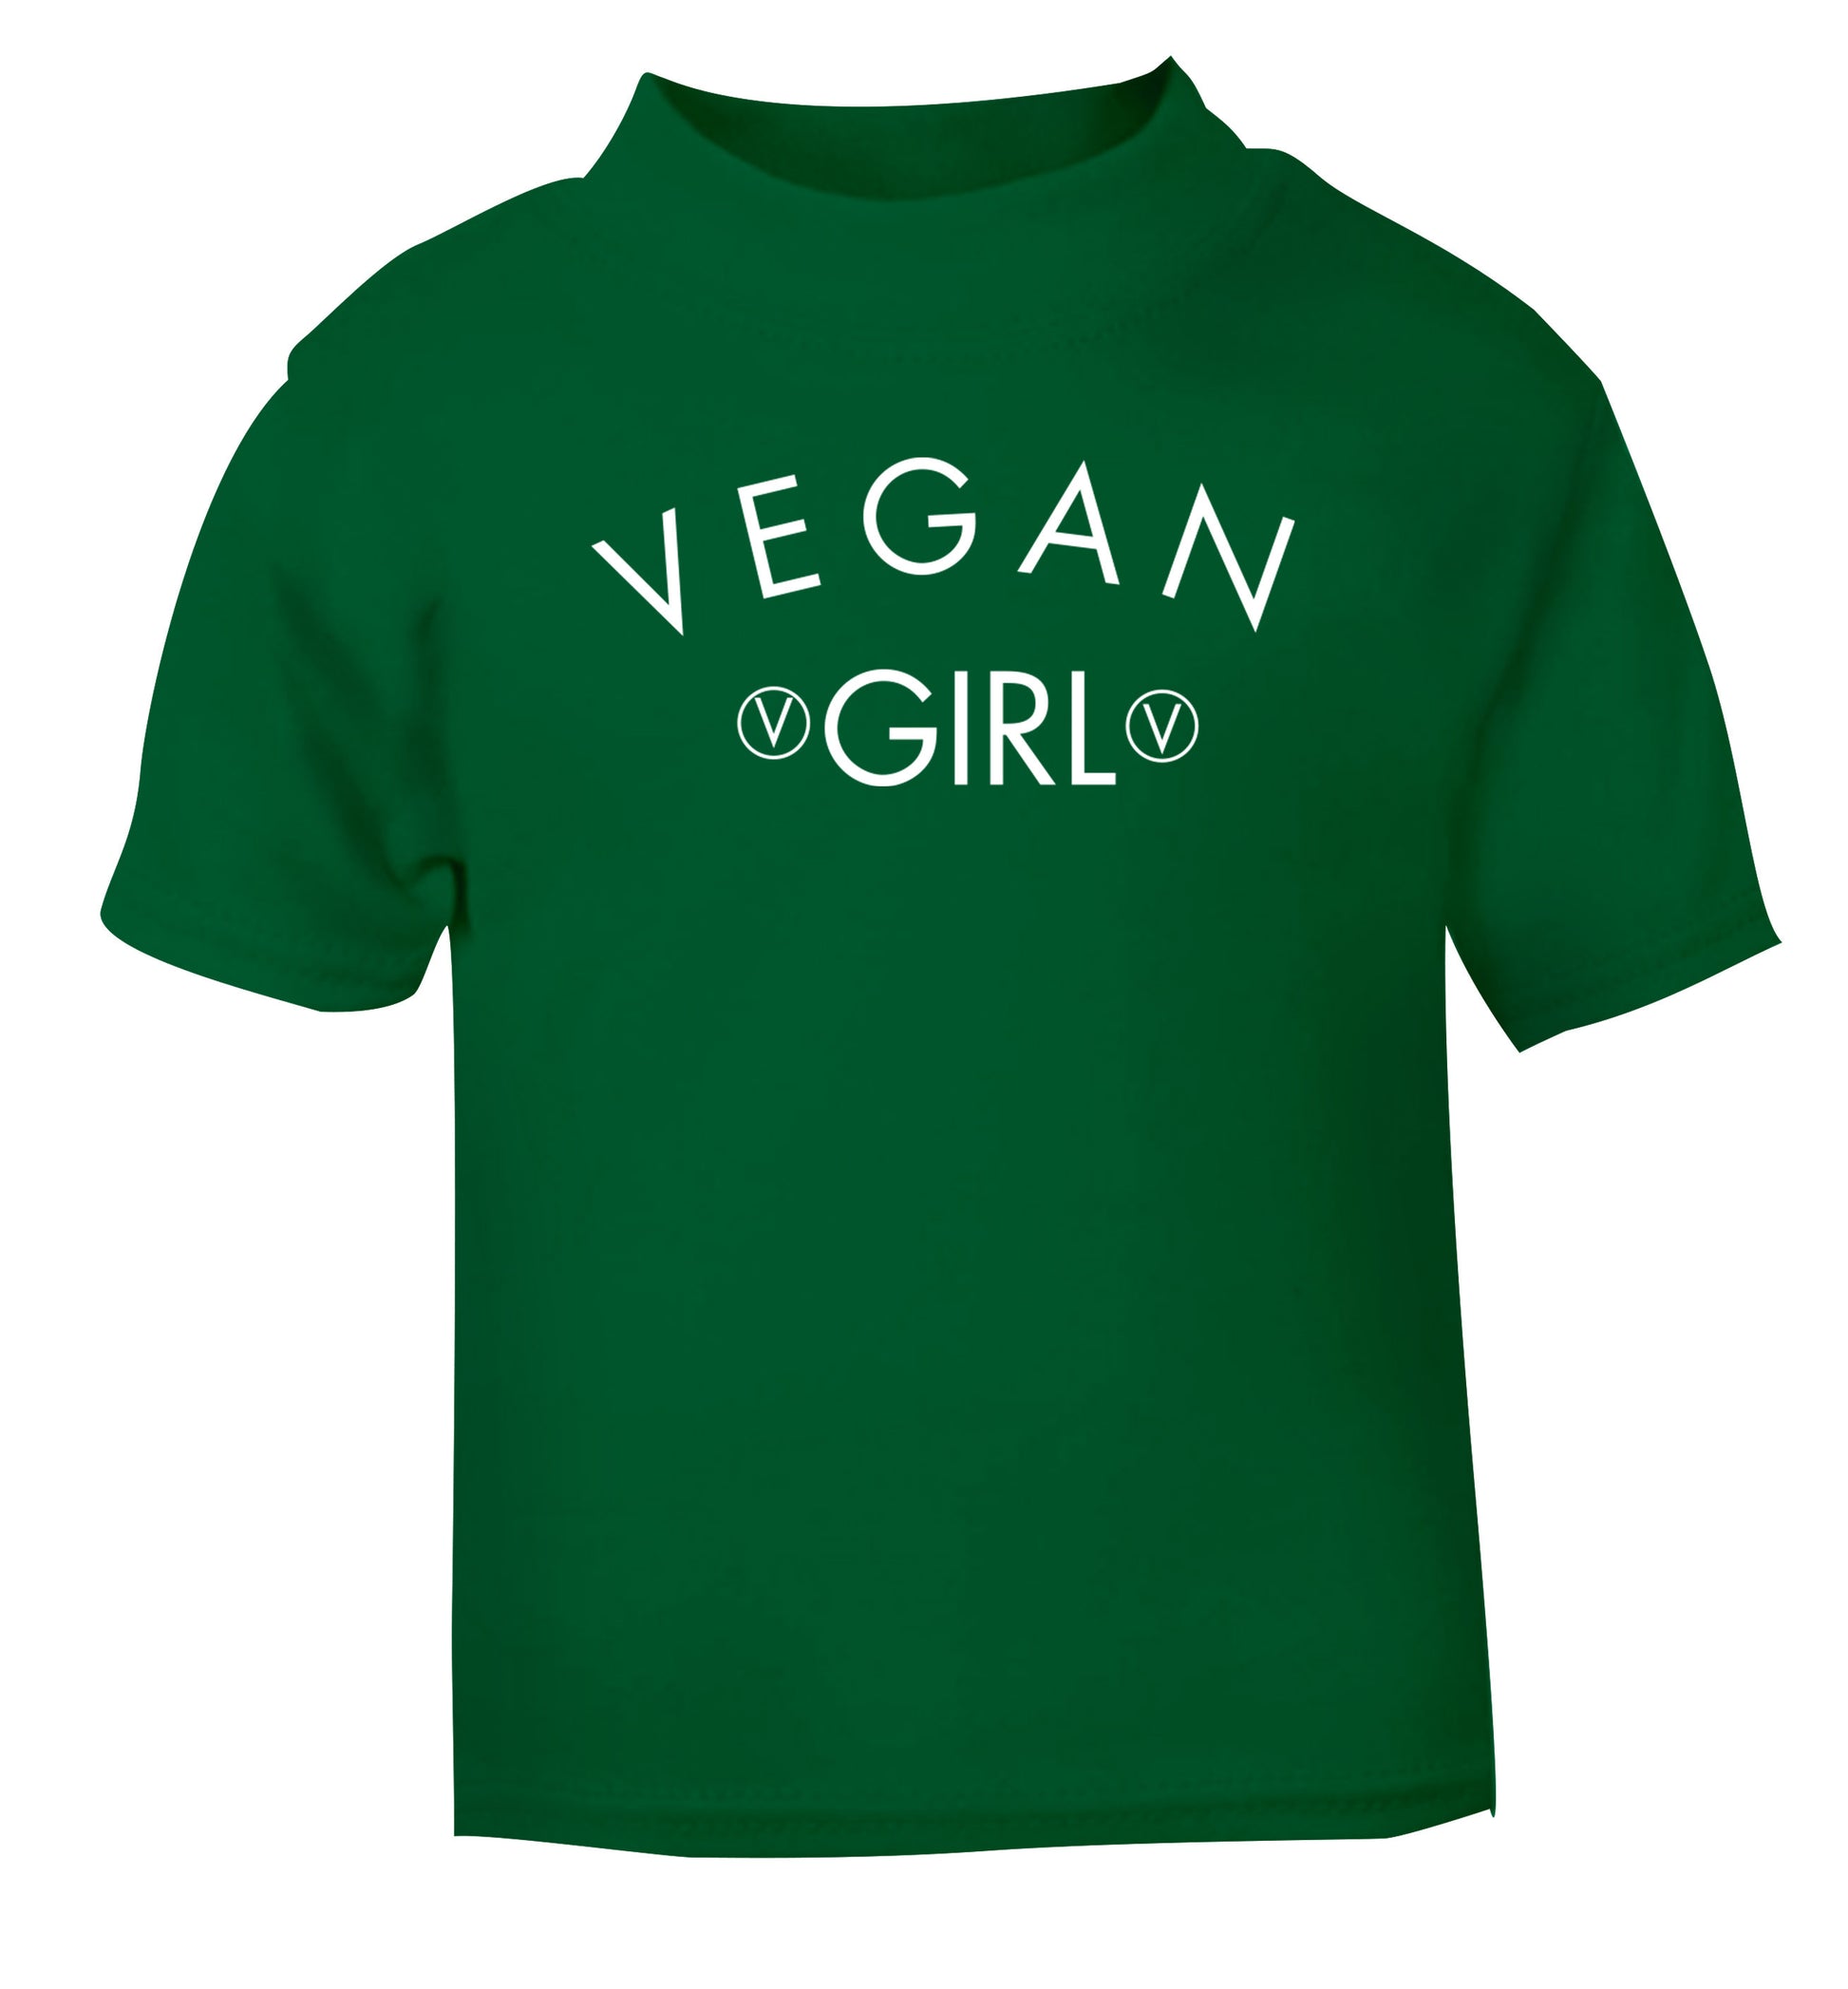 Vegan girl green Baby Toddler Tshirt 2 Years